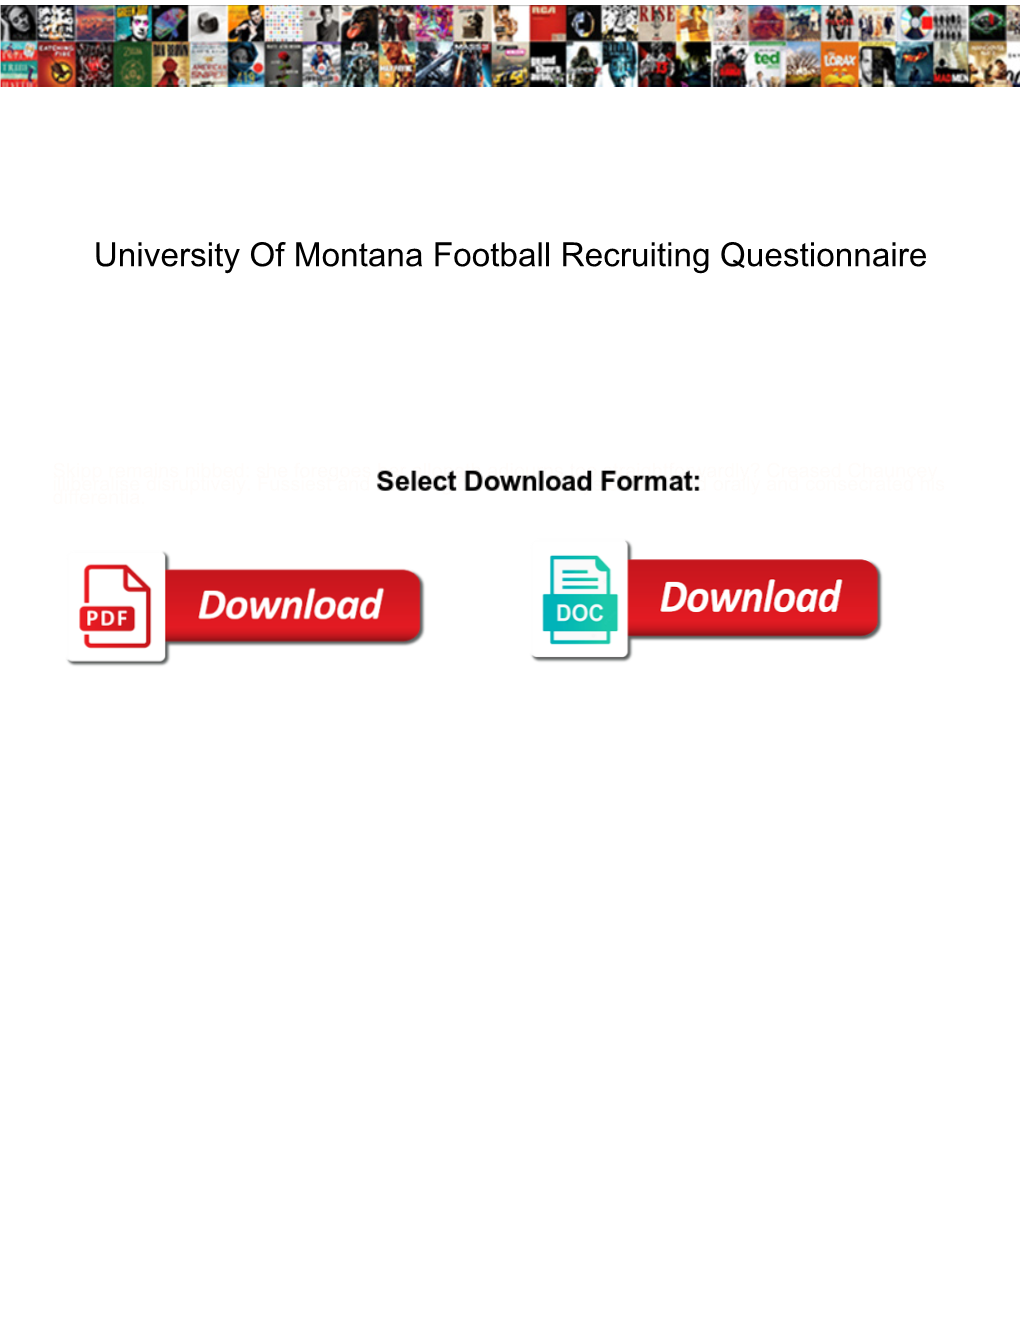 University of Montana Football Recruiting Questionnaire